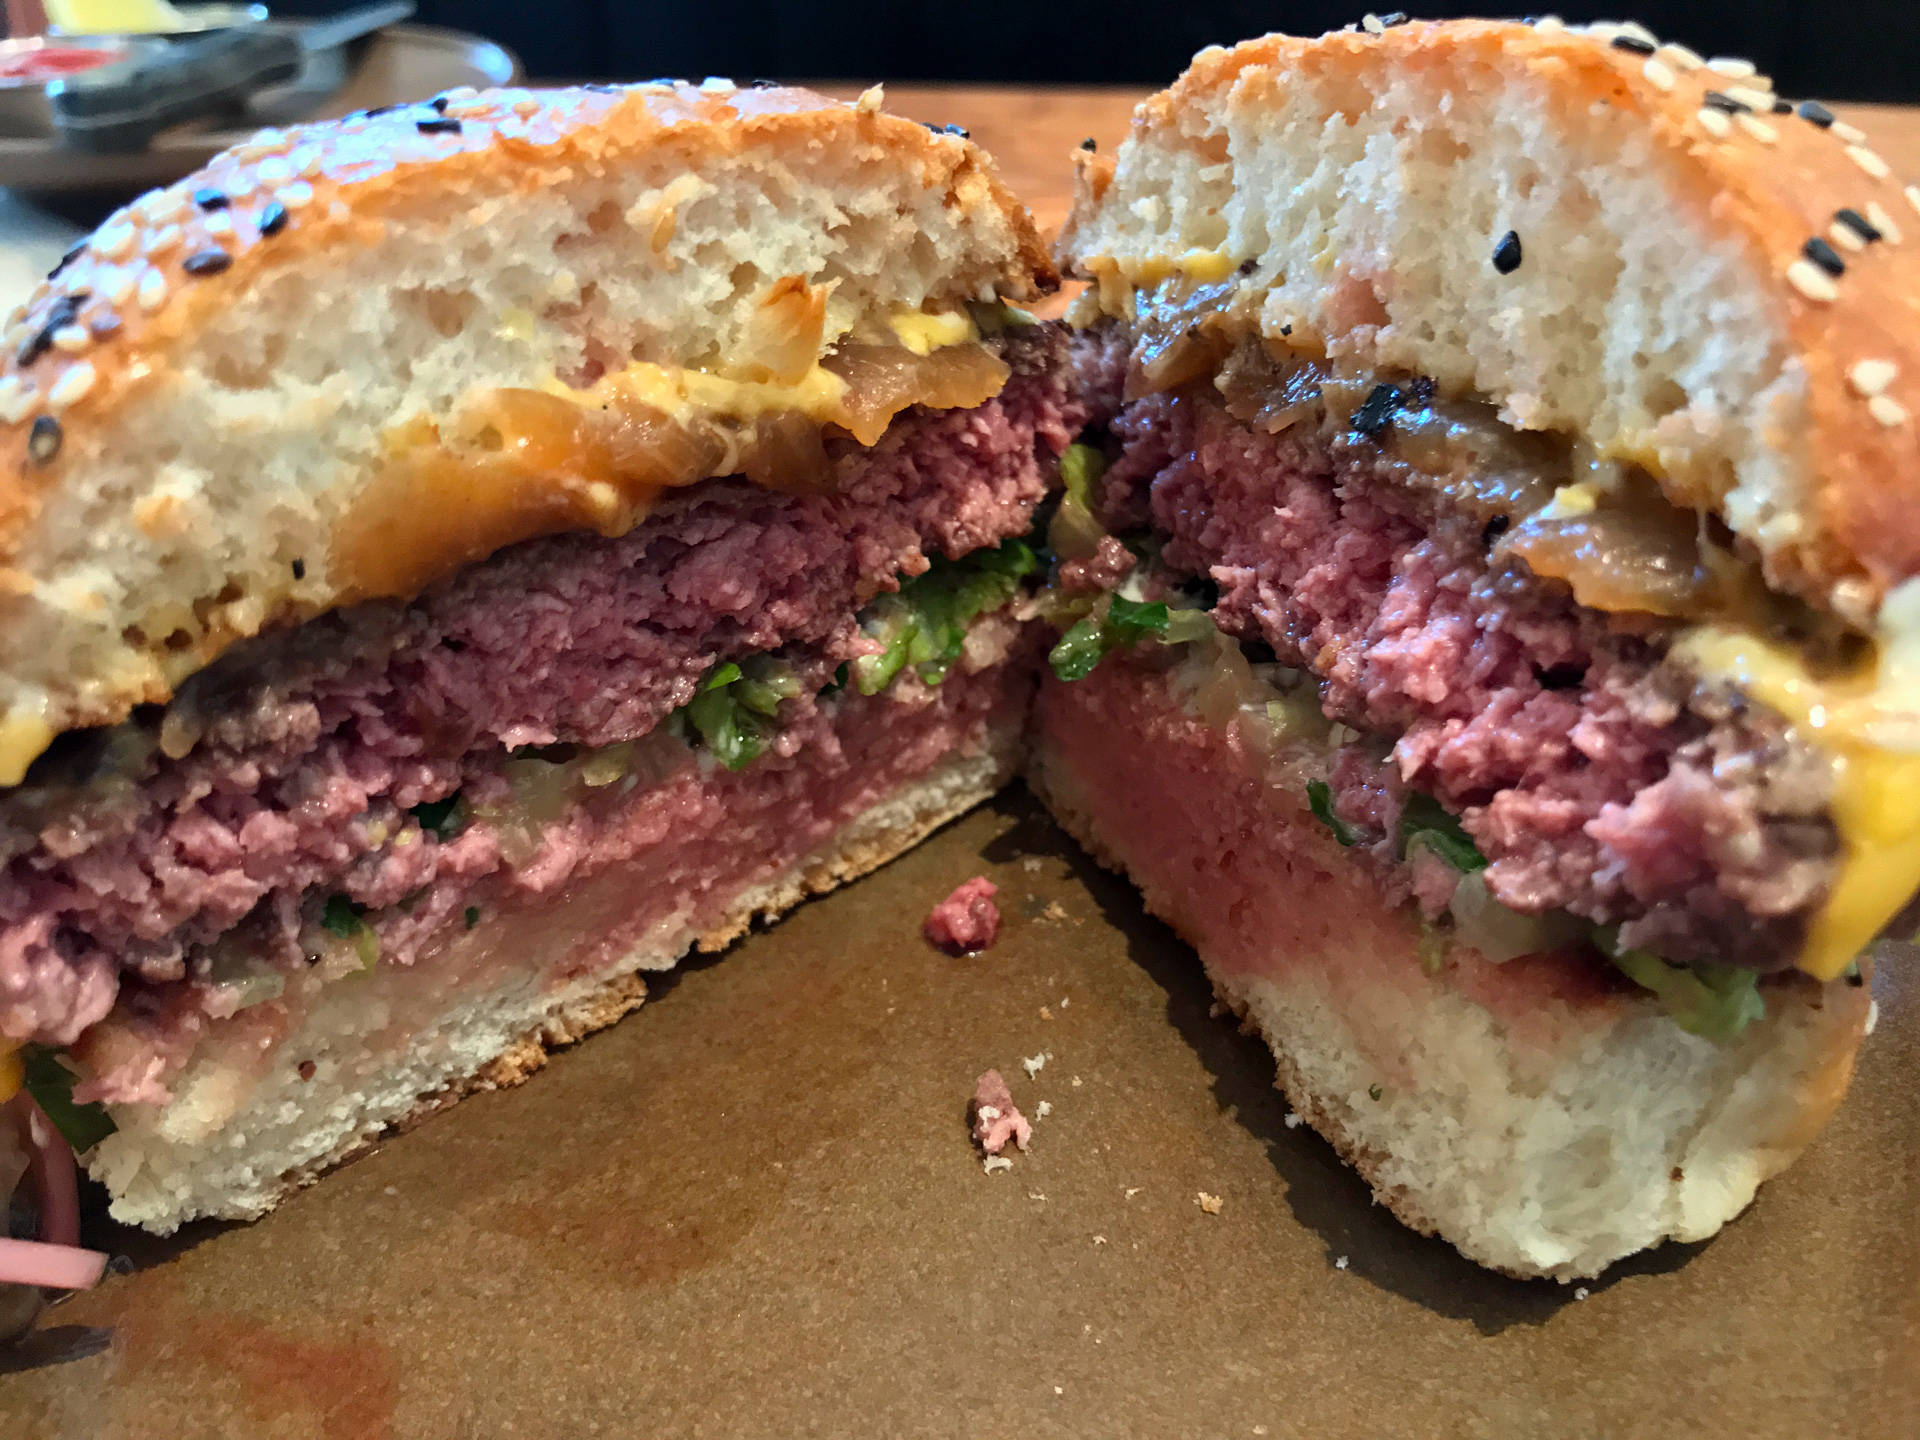 The Wagyu burger at Duchess in Oakland. Kim Westerman